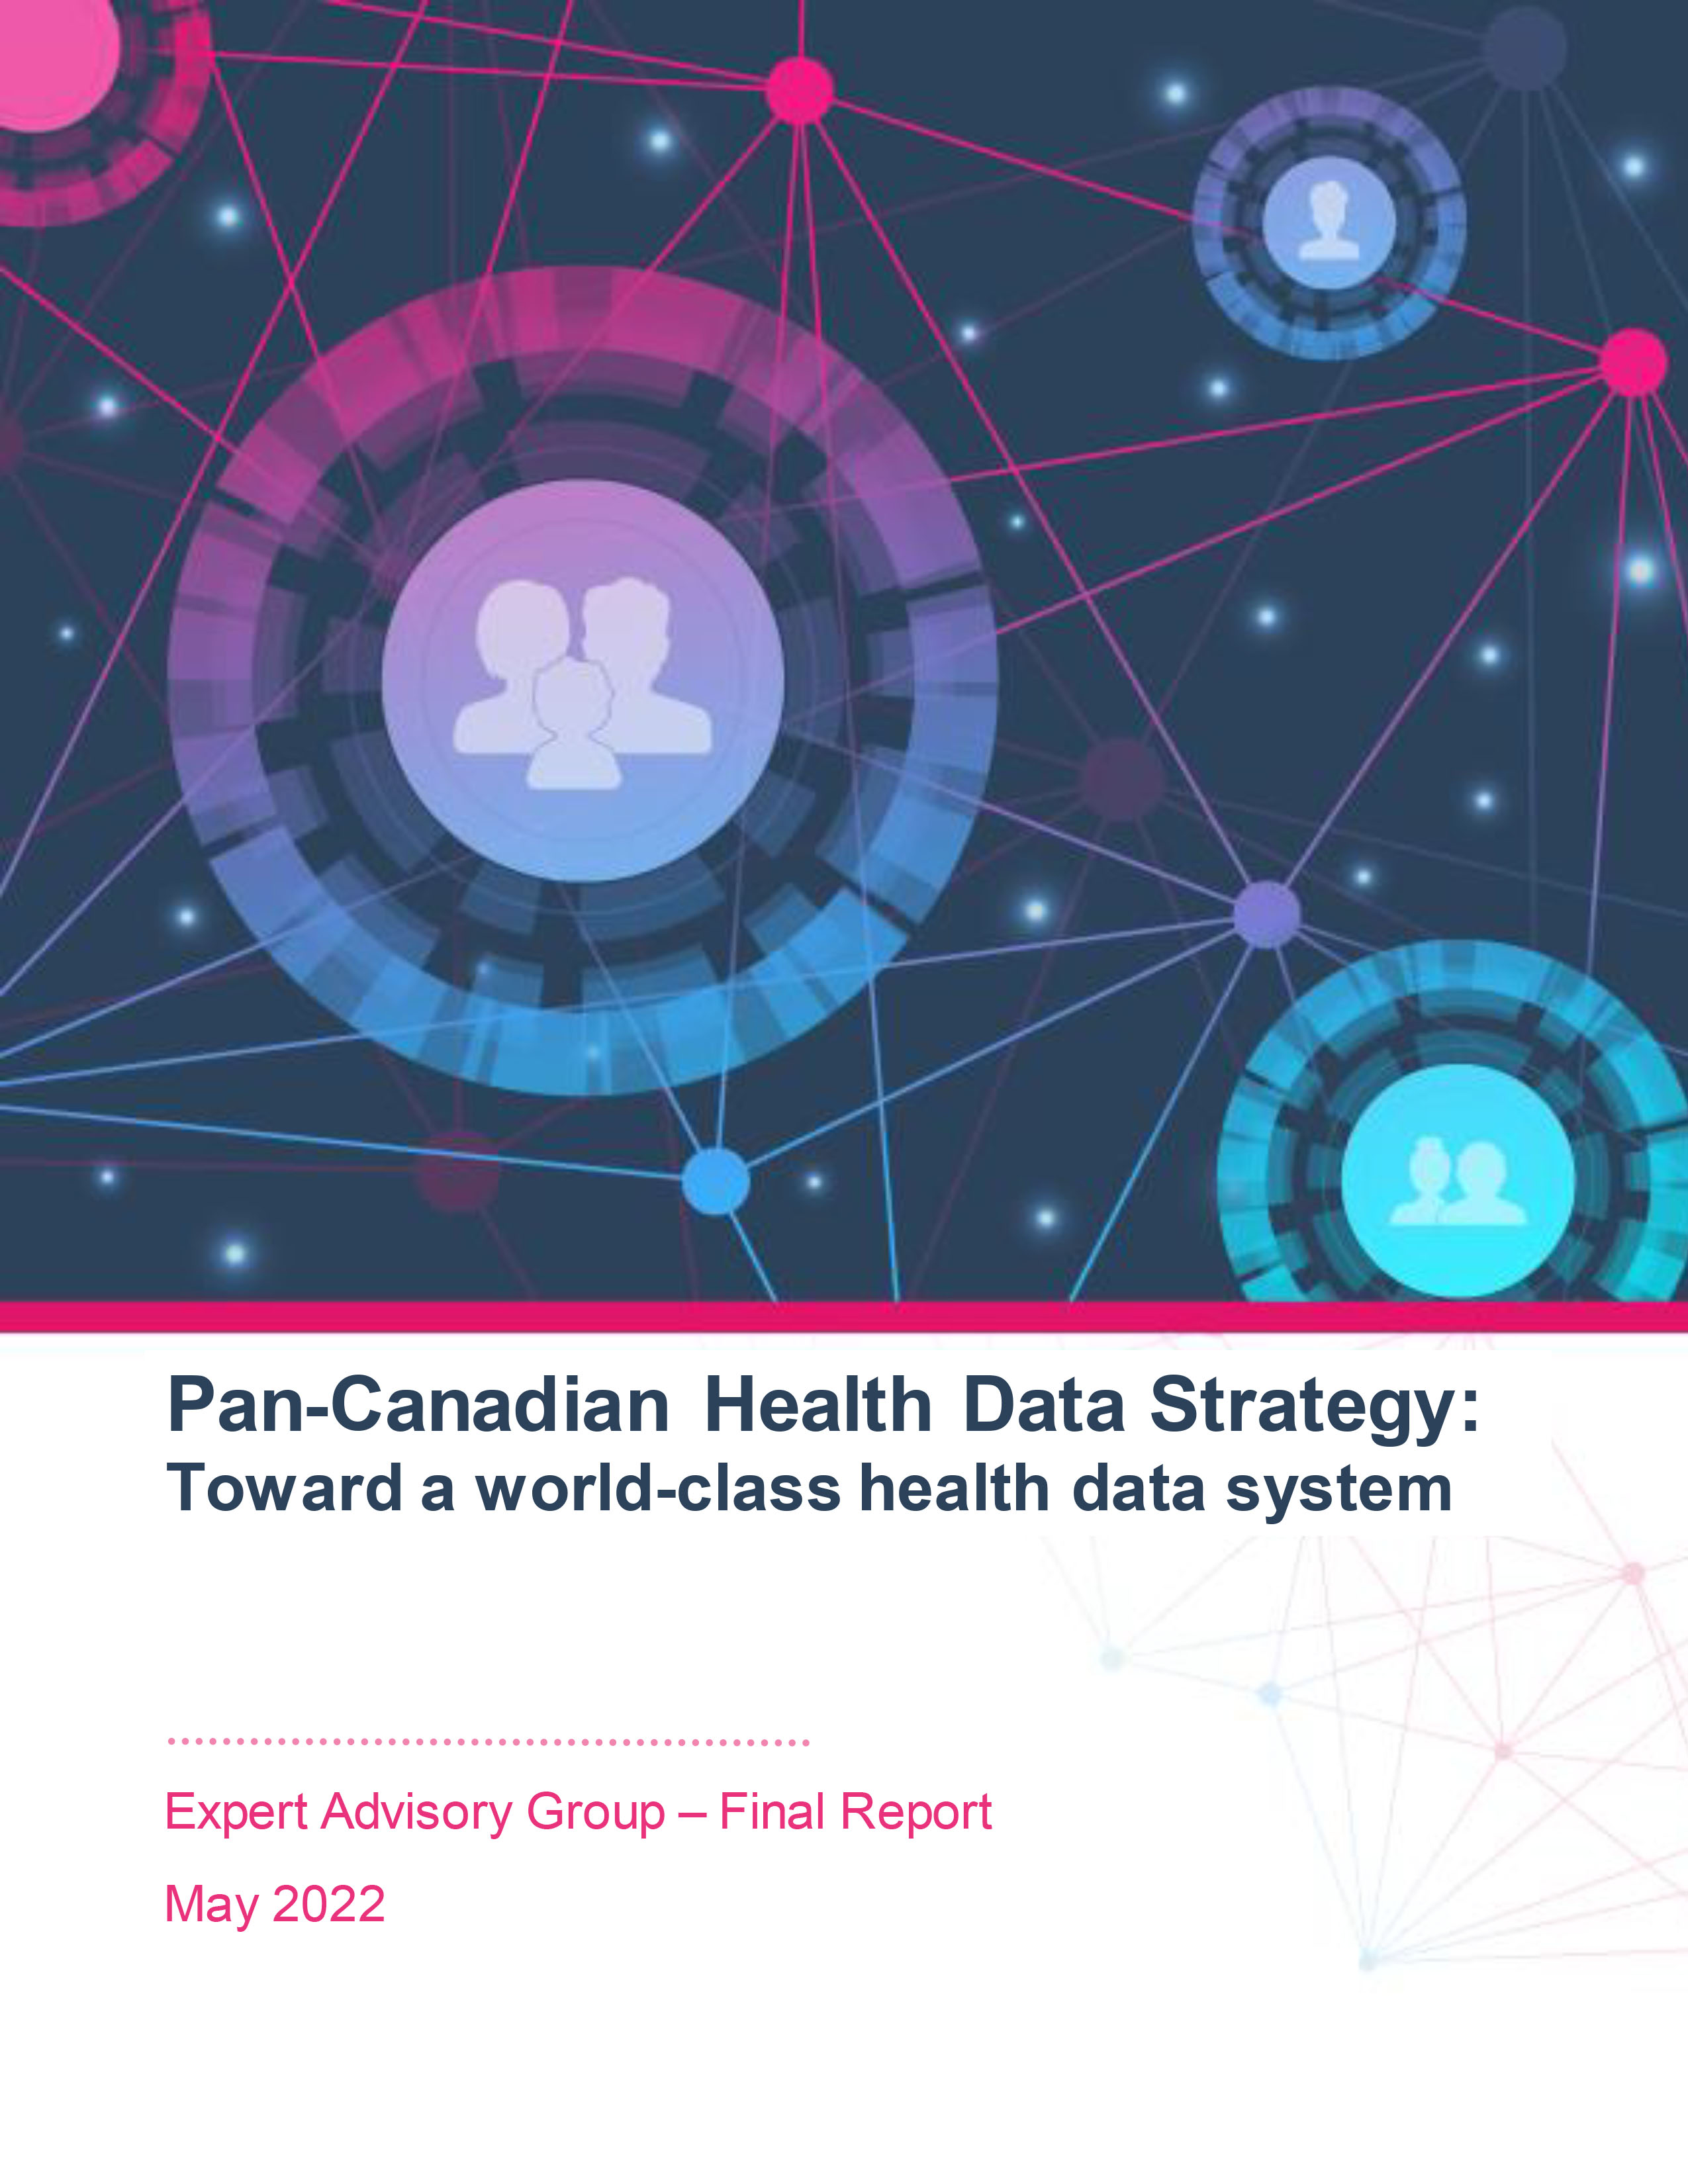 Expert Advisory Group Report 3: Toward a world-class health data system